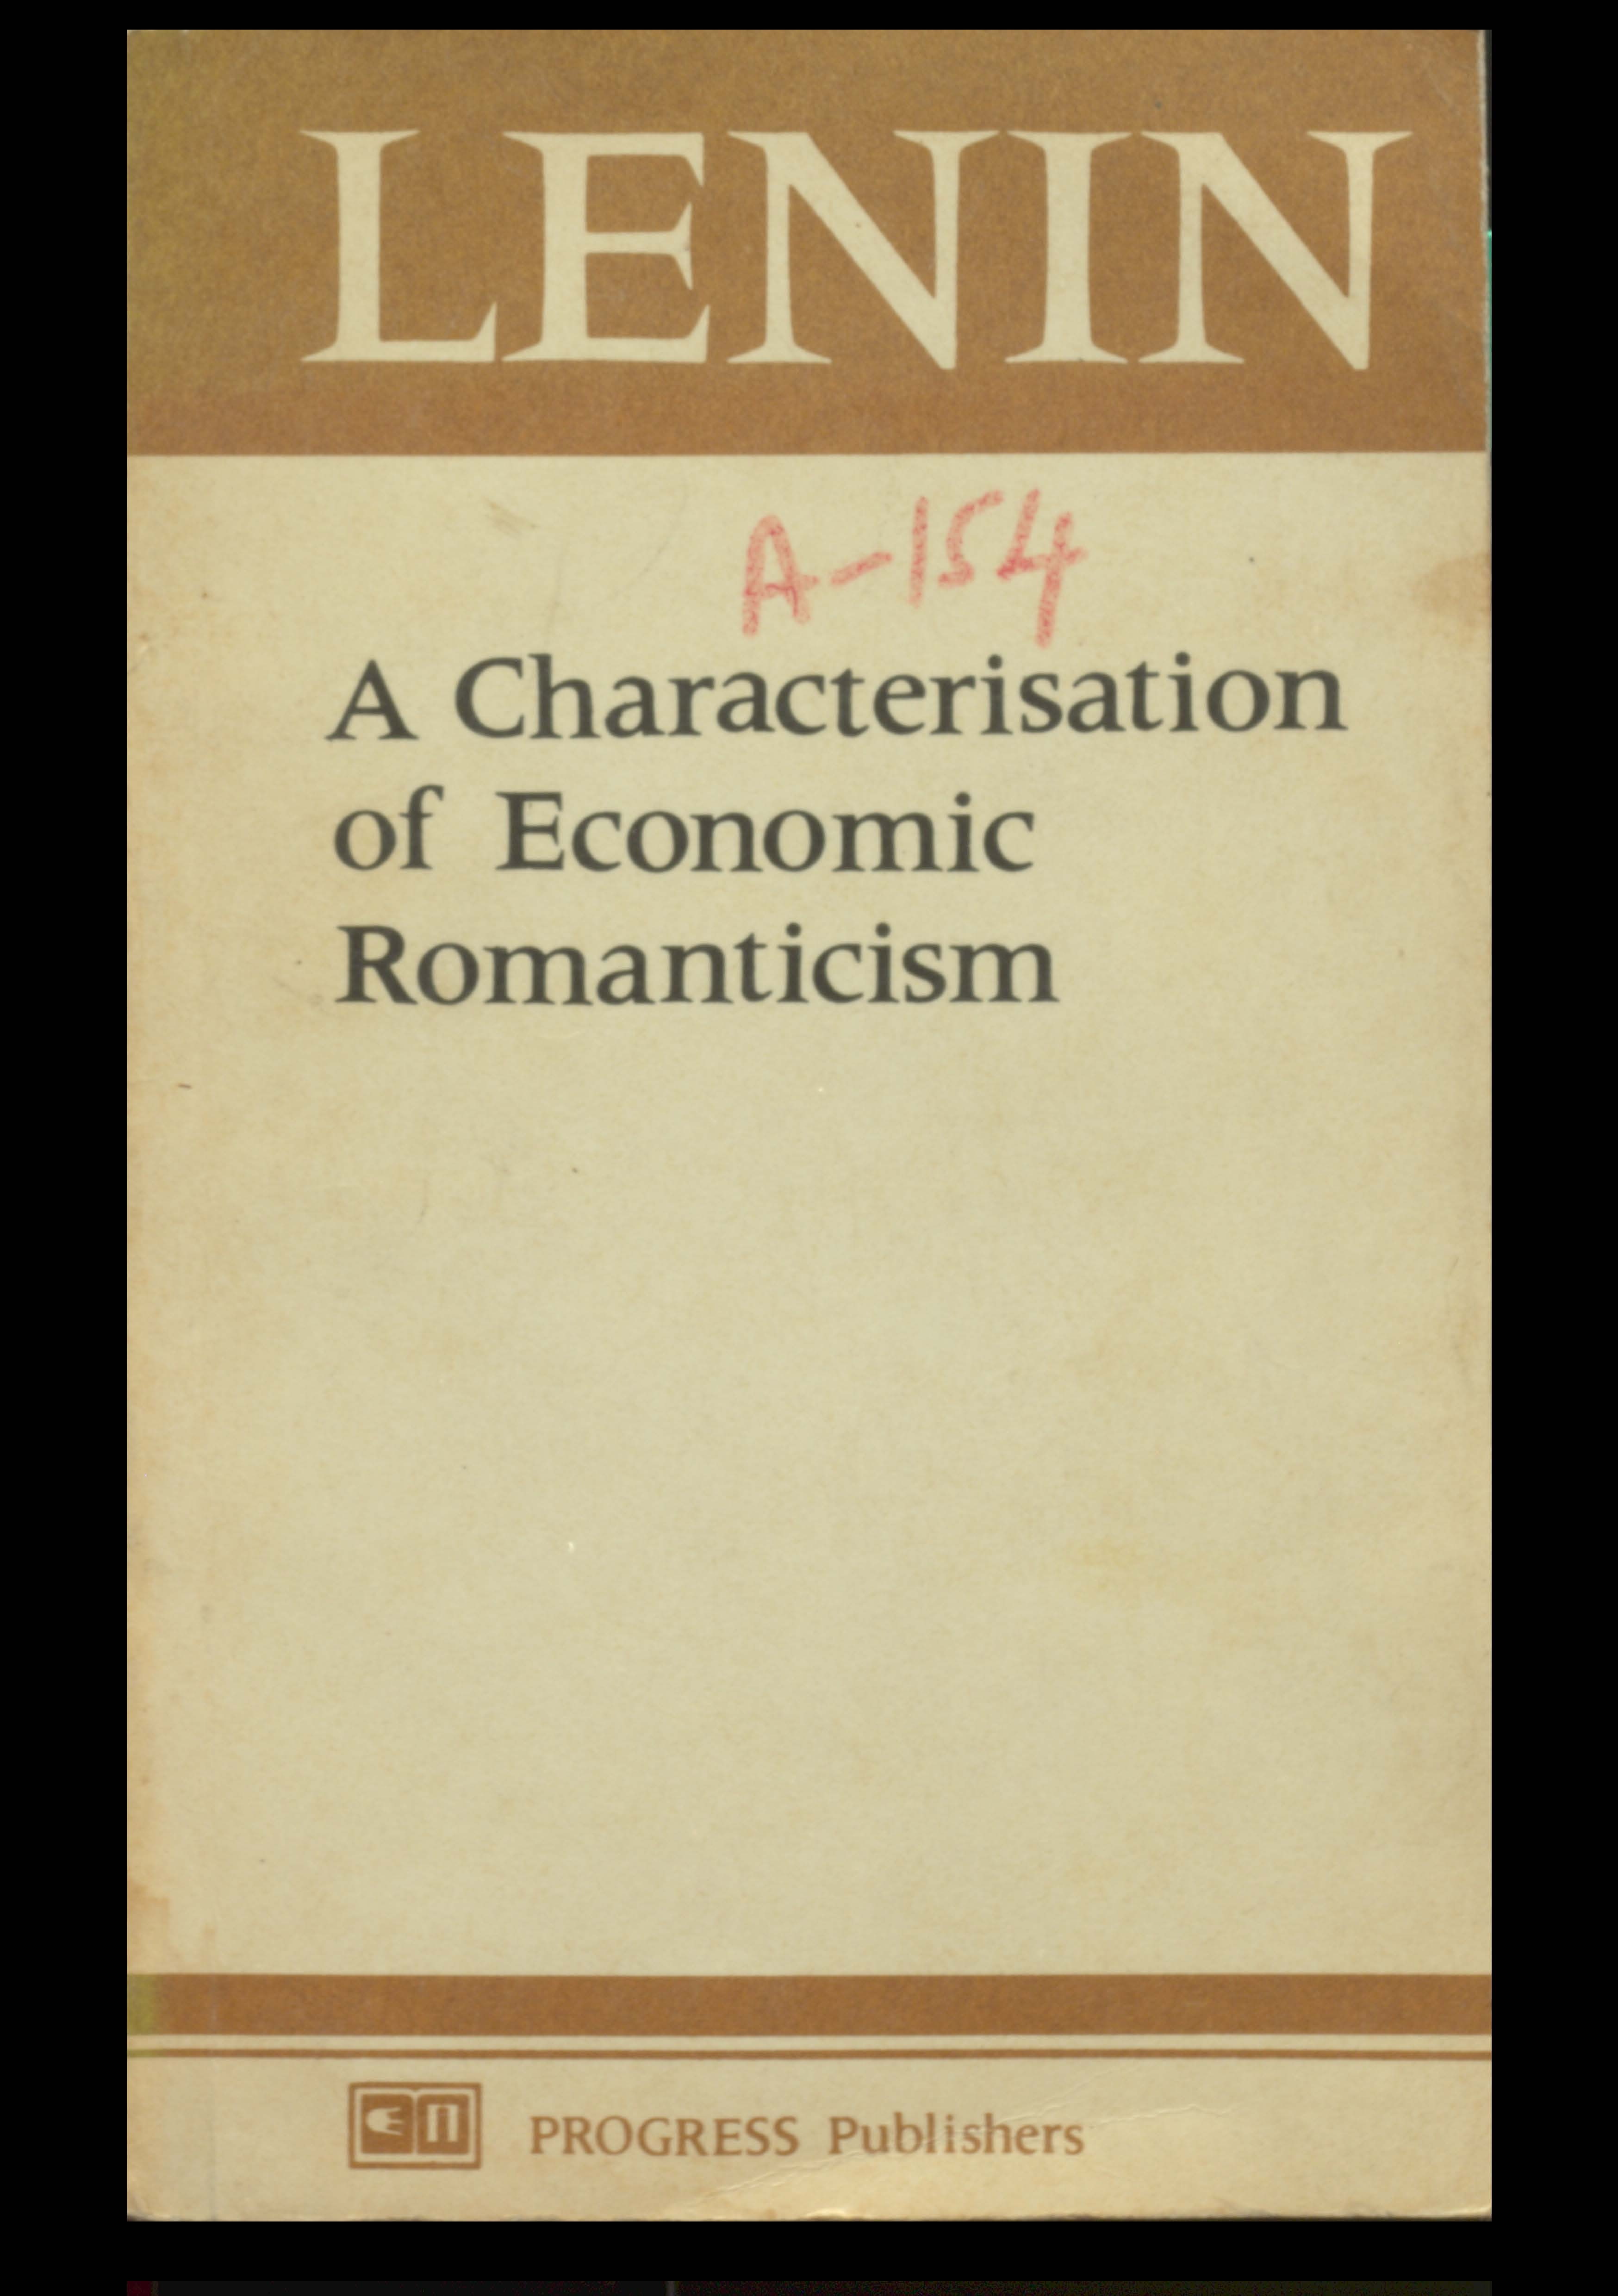 LENIN  a characterisation of economic romanticism (sismondi and our native sismondists)